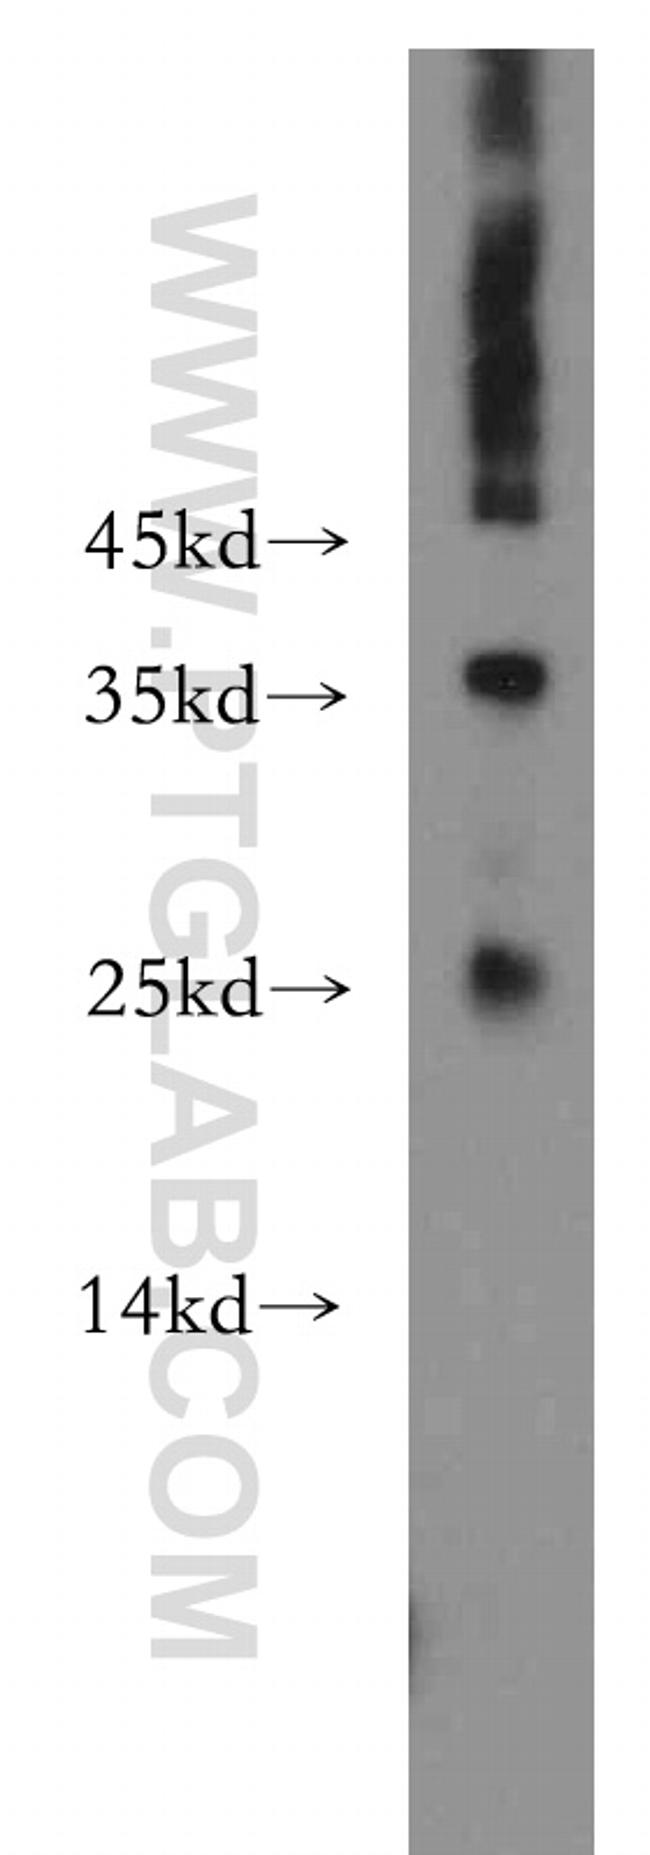 ADAT2 Antibody in Western Blot (WB)